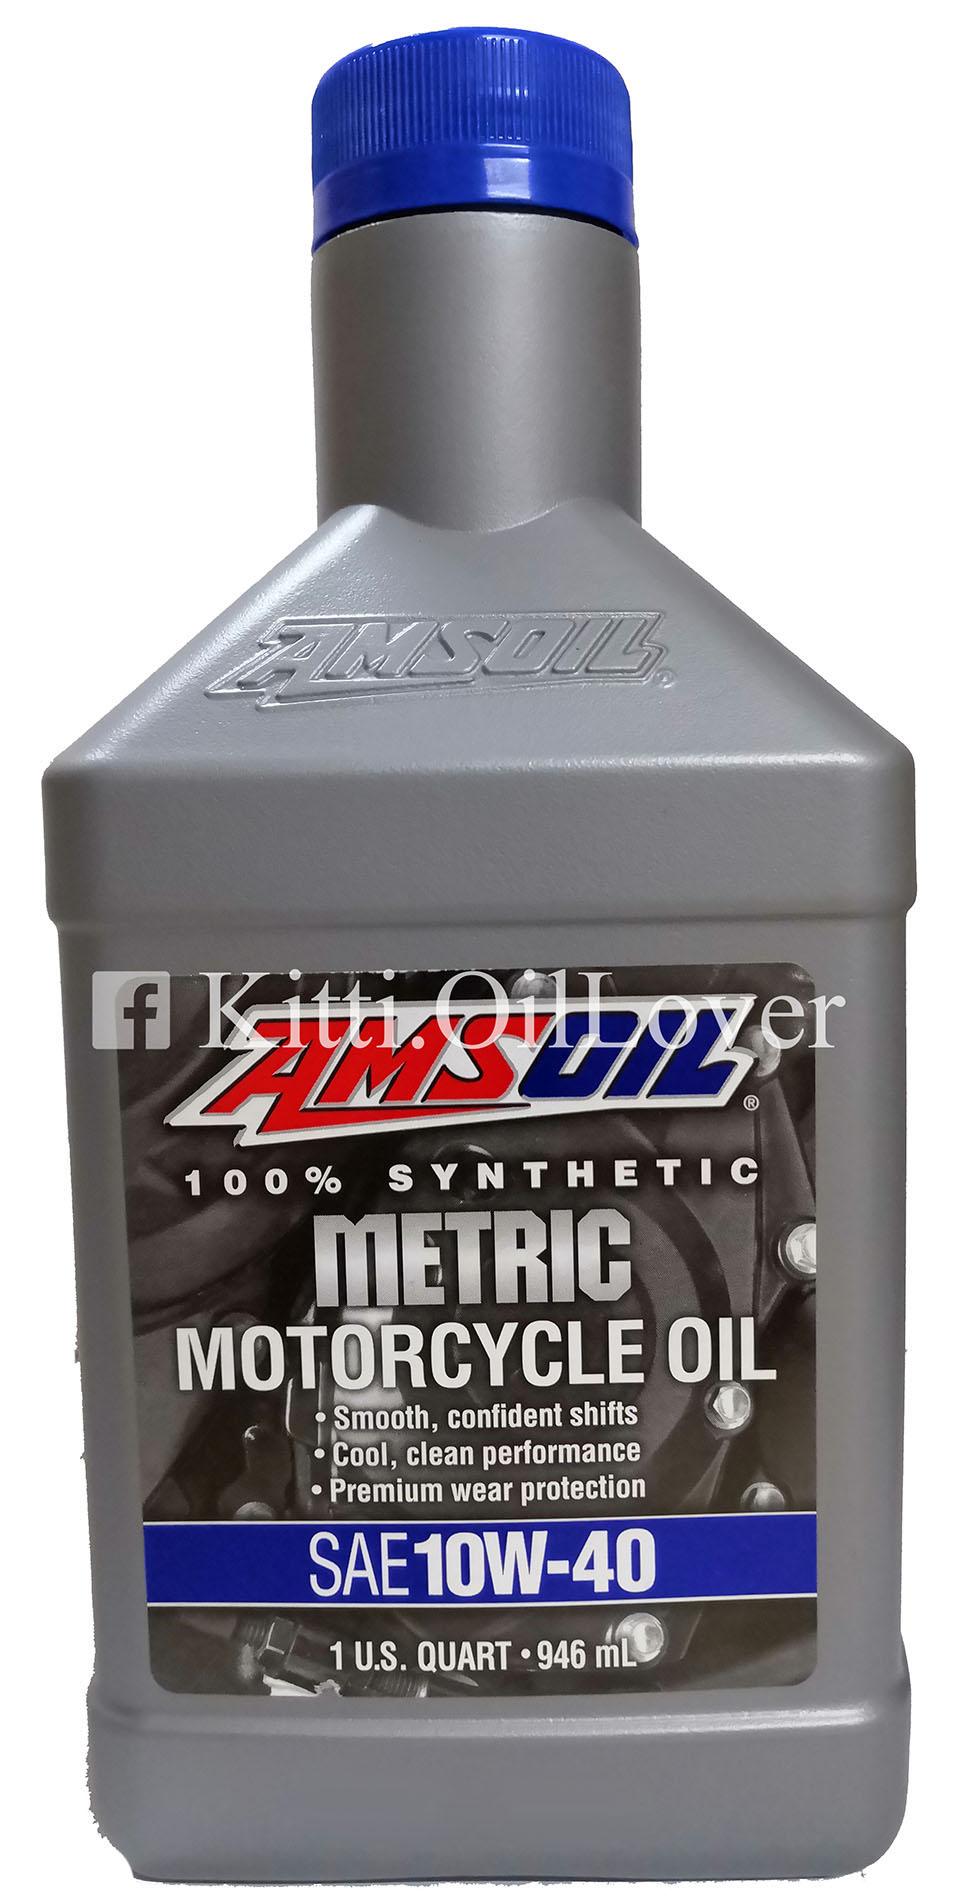 Amsoil 100% Synthetic SAE 10W-40 Metric Motorcycle Oil น้ำมันเครื่องสังเคราะห์ สำหรับมอเตอร์ไซค์ Big bike (946 mL)